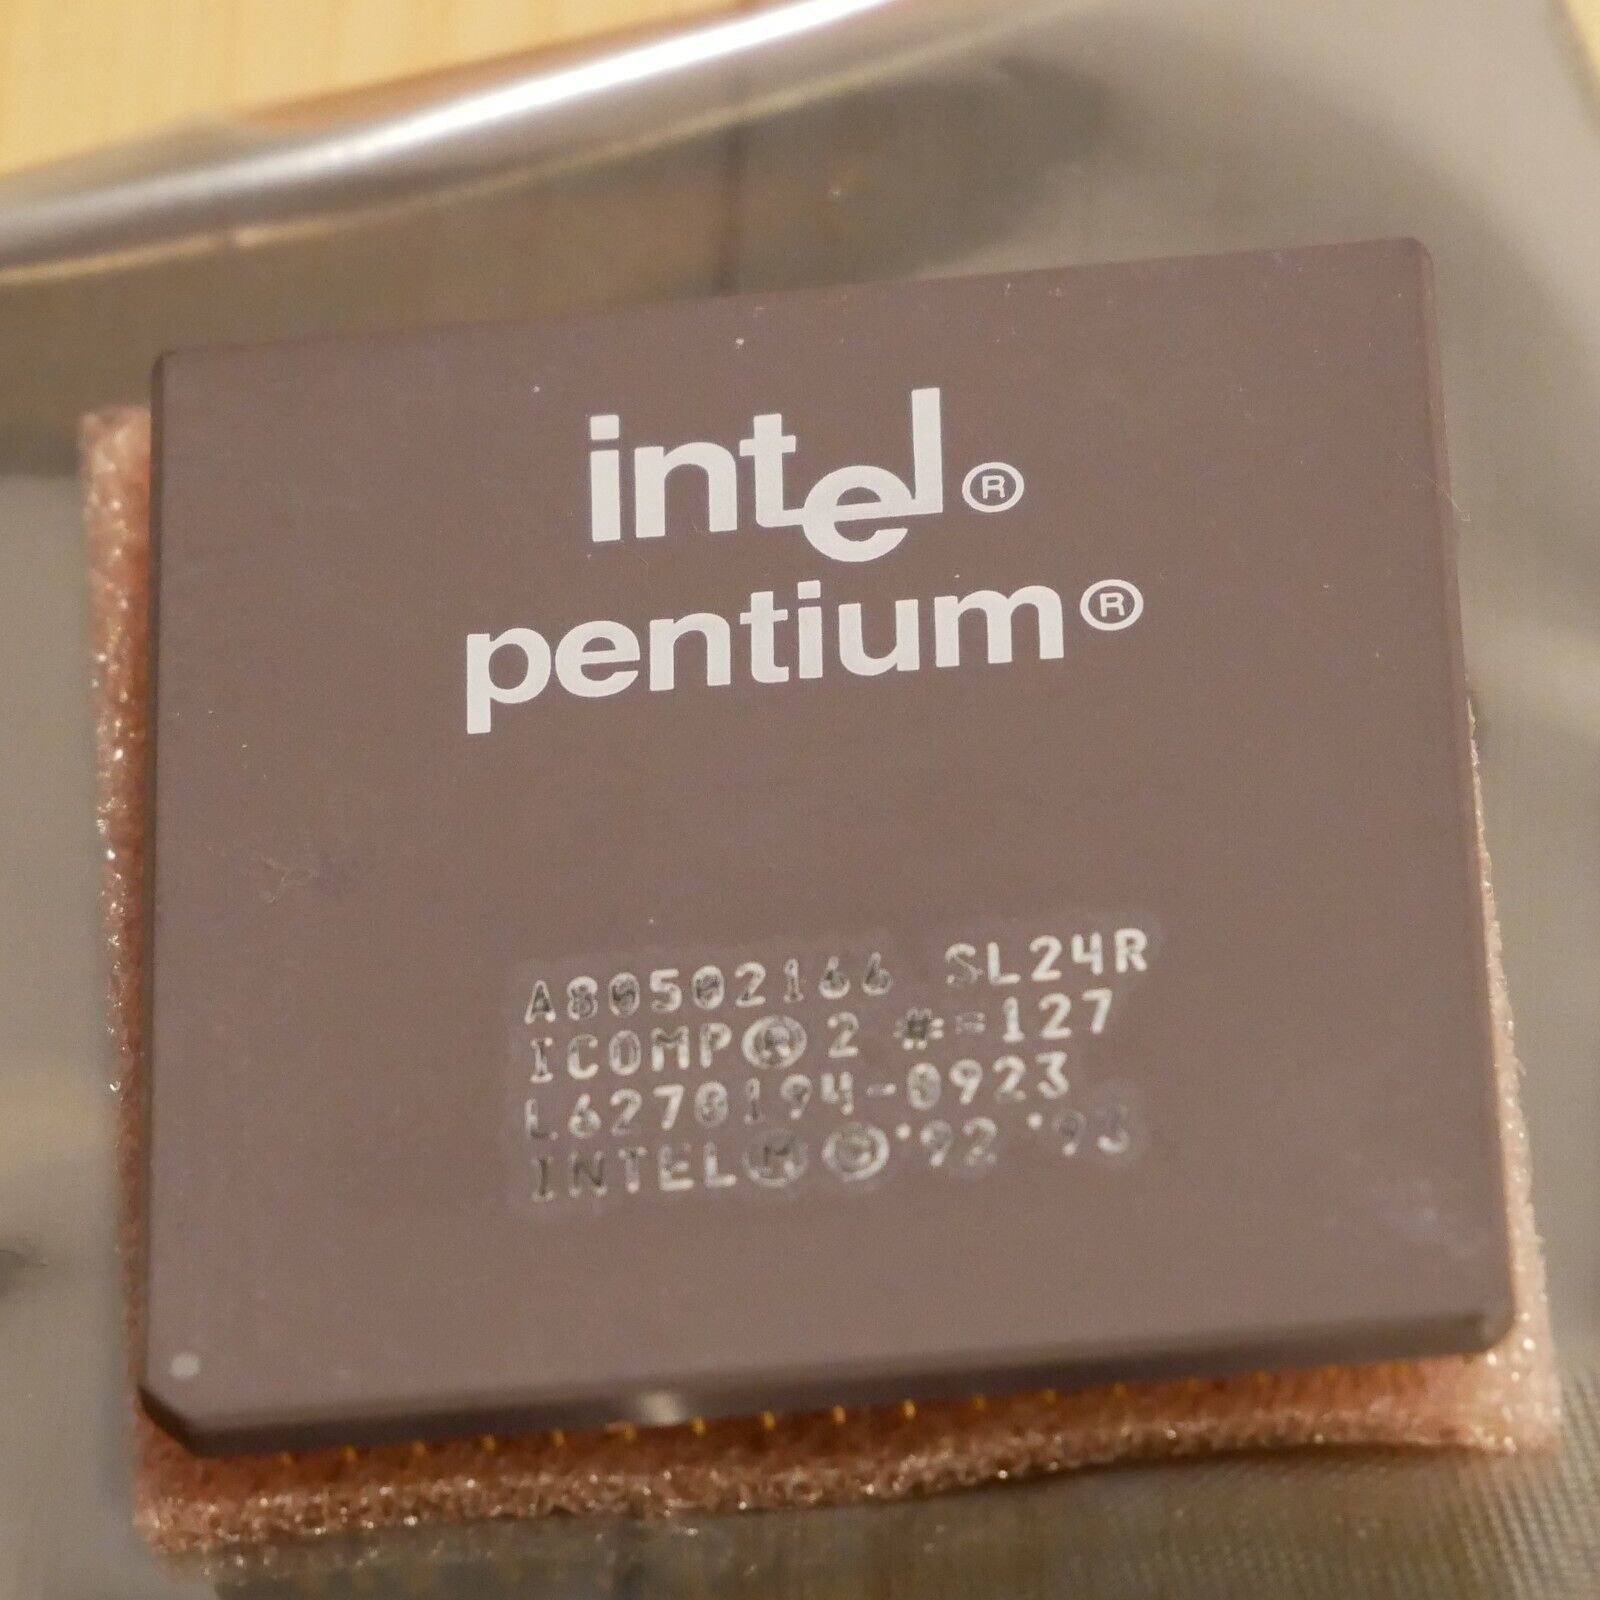 Intel Pentium 166 MHZ P166 x86 CPU Processor A80502166 - Tested & Working 03 - $23.36